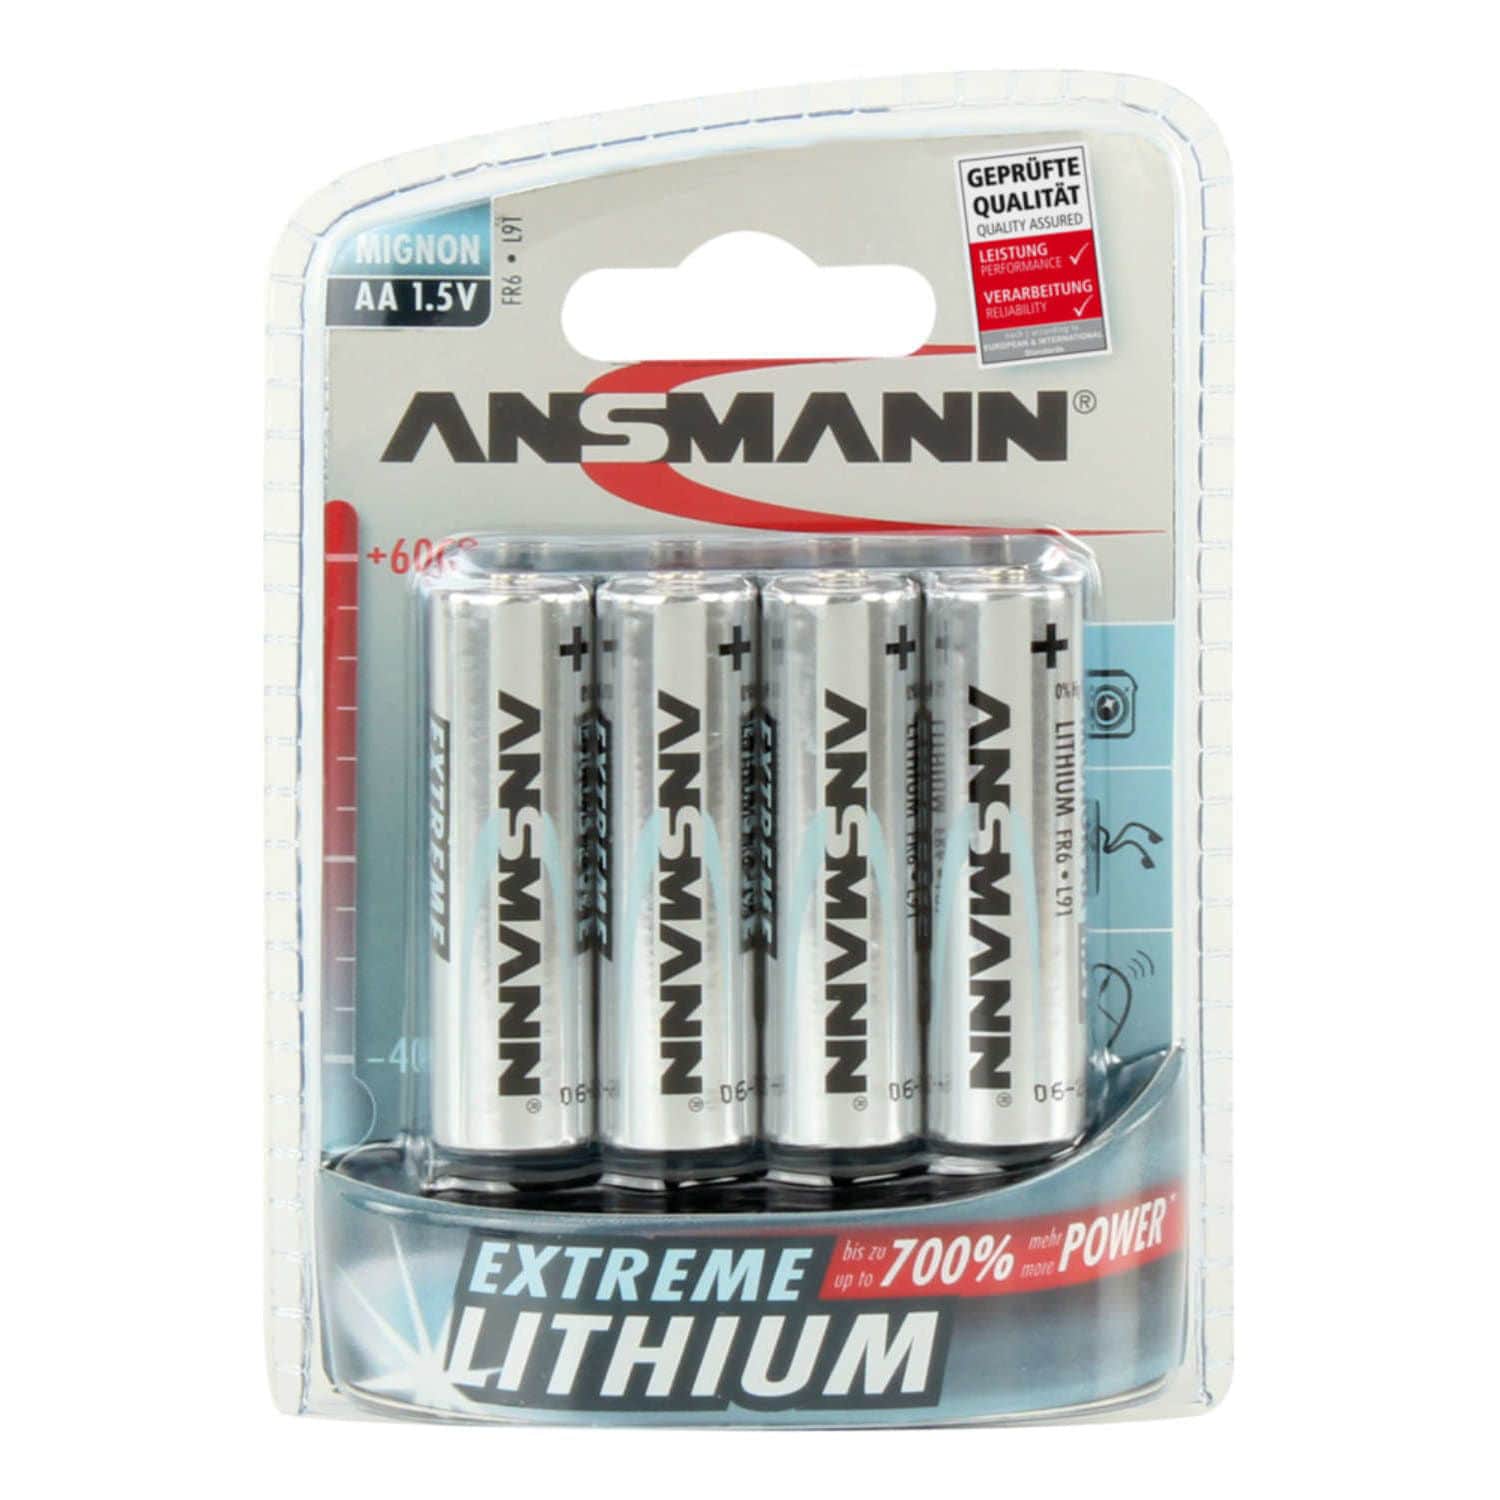 Ansmann Extreme Lithium AA 1,5v 4pk